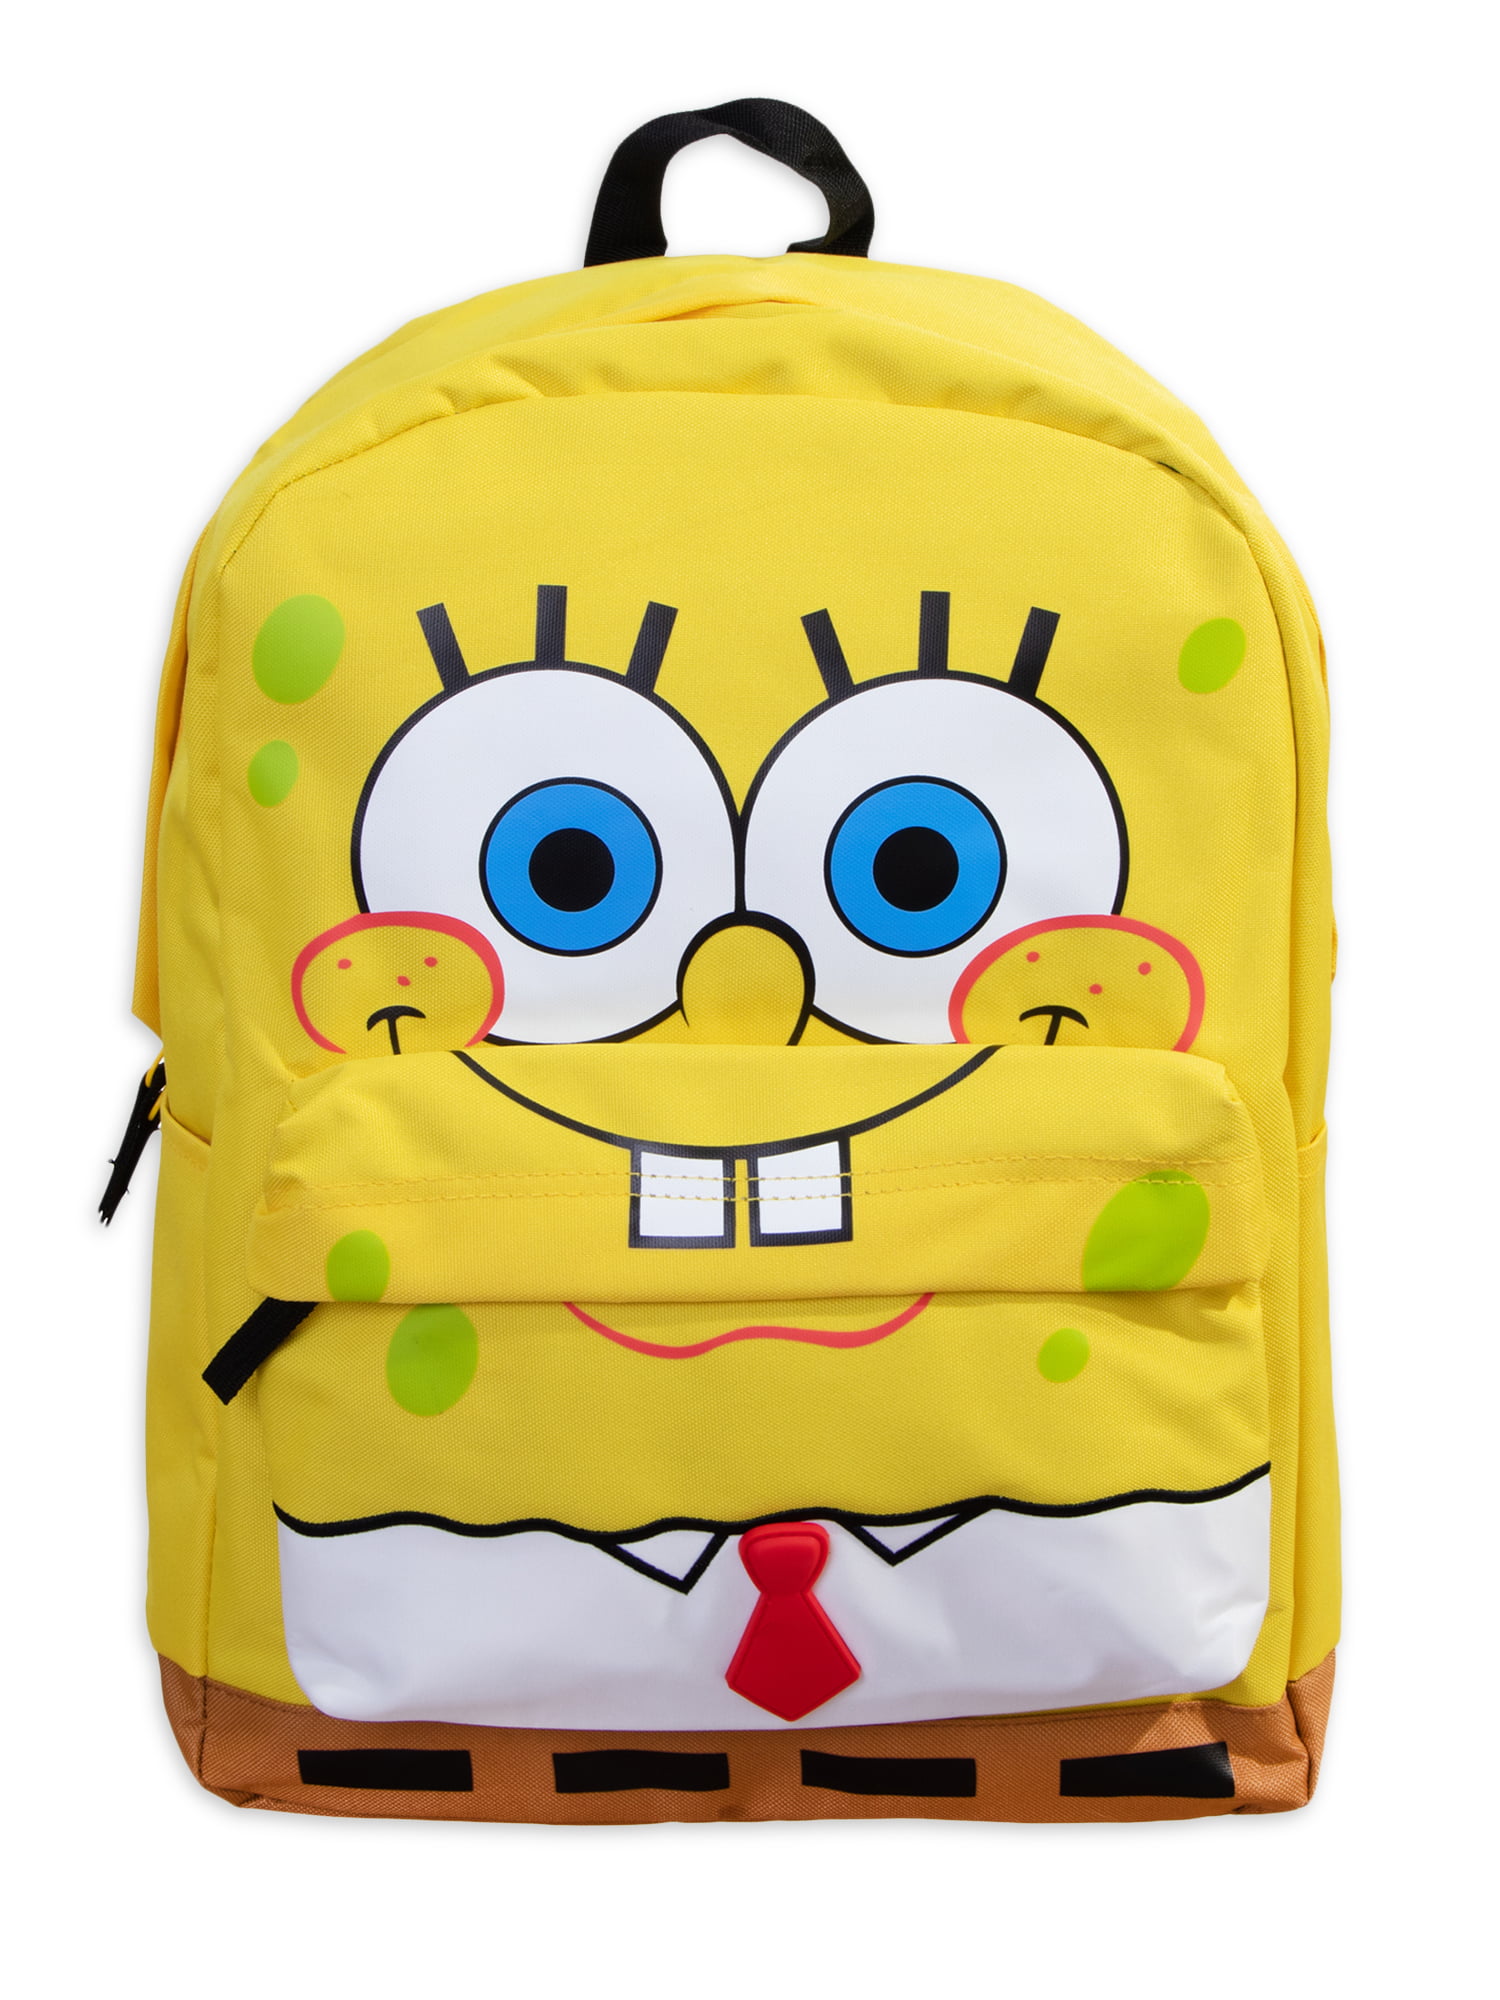 Spongebob pack. Backpack Spongebob.